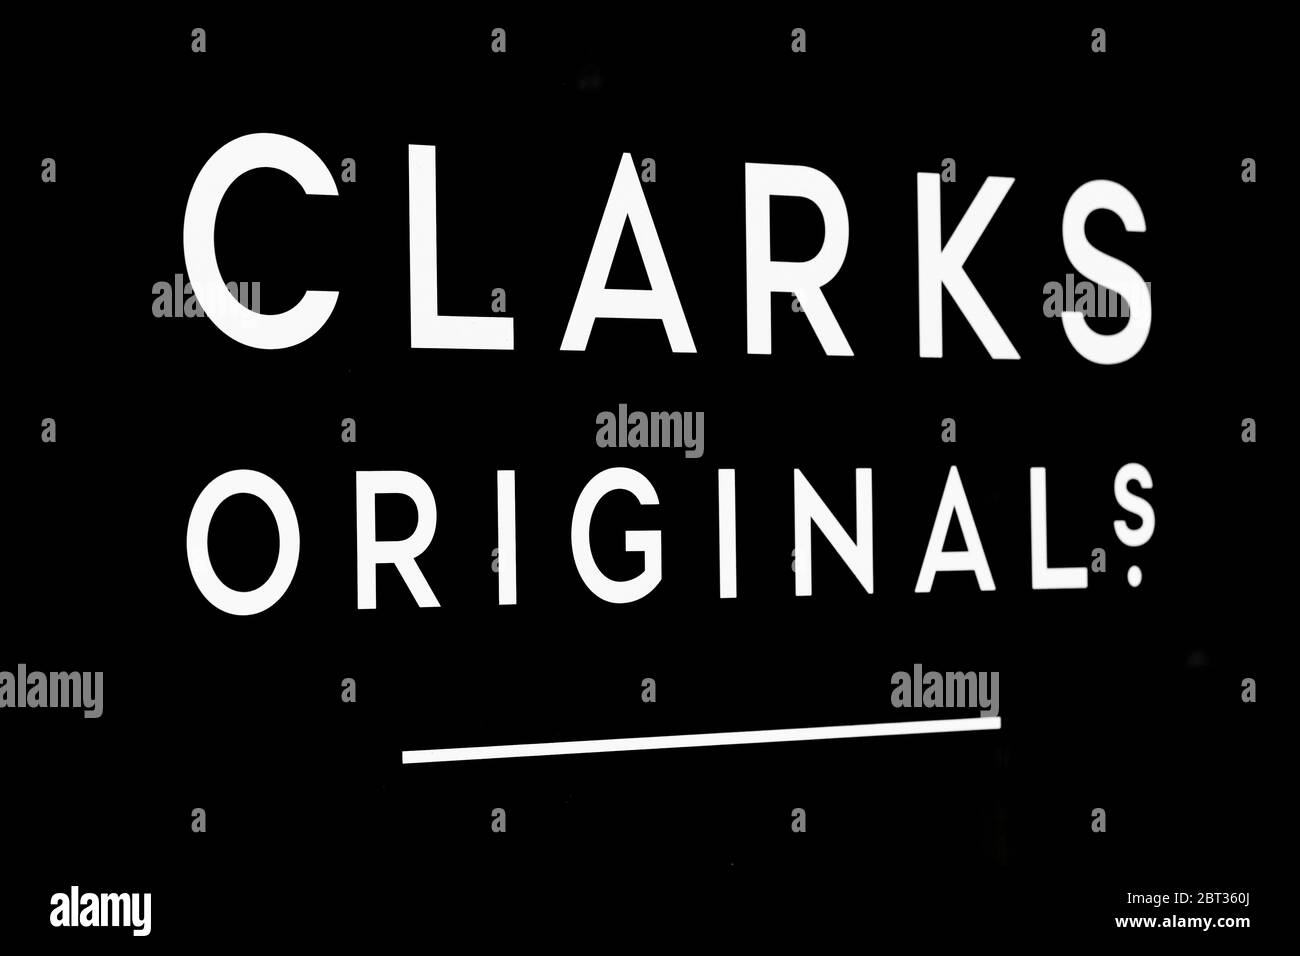 clarks shoes jobs uk